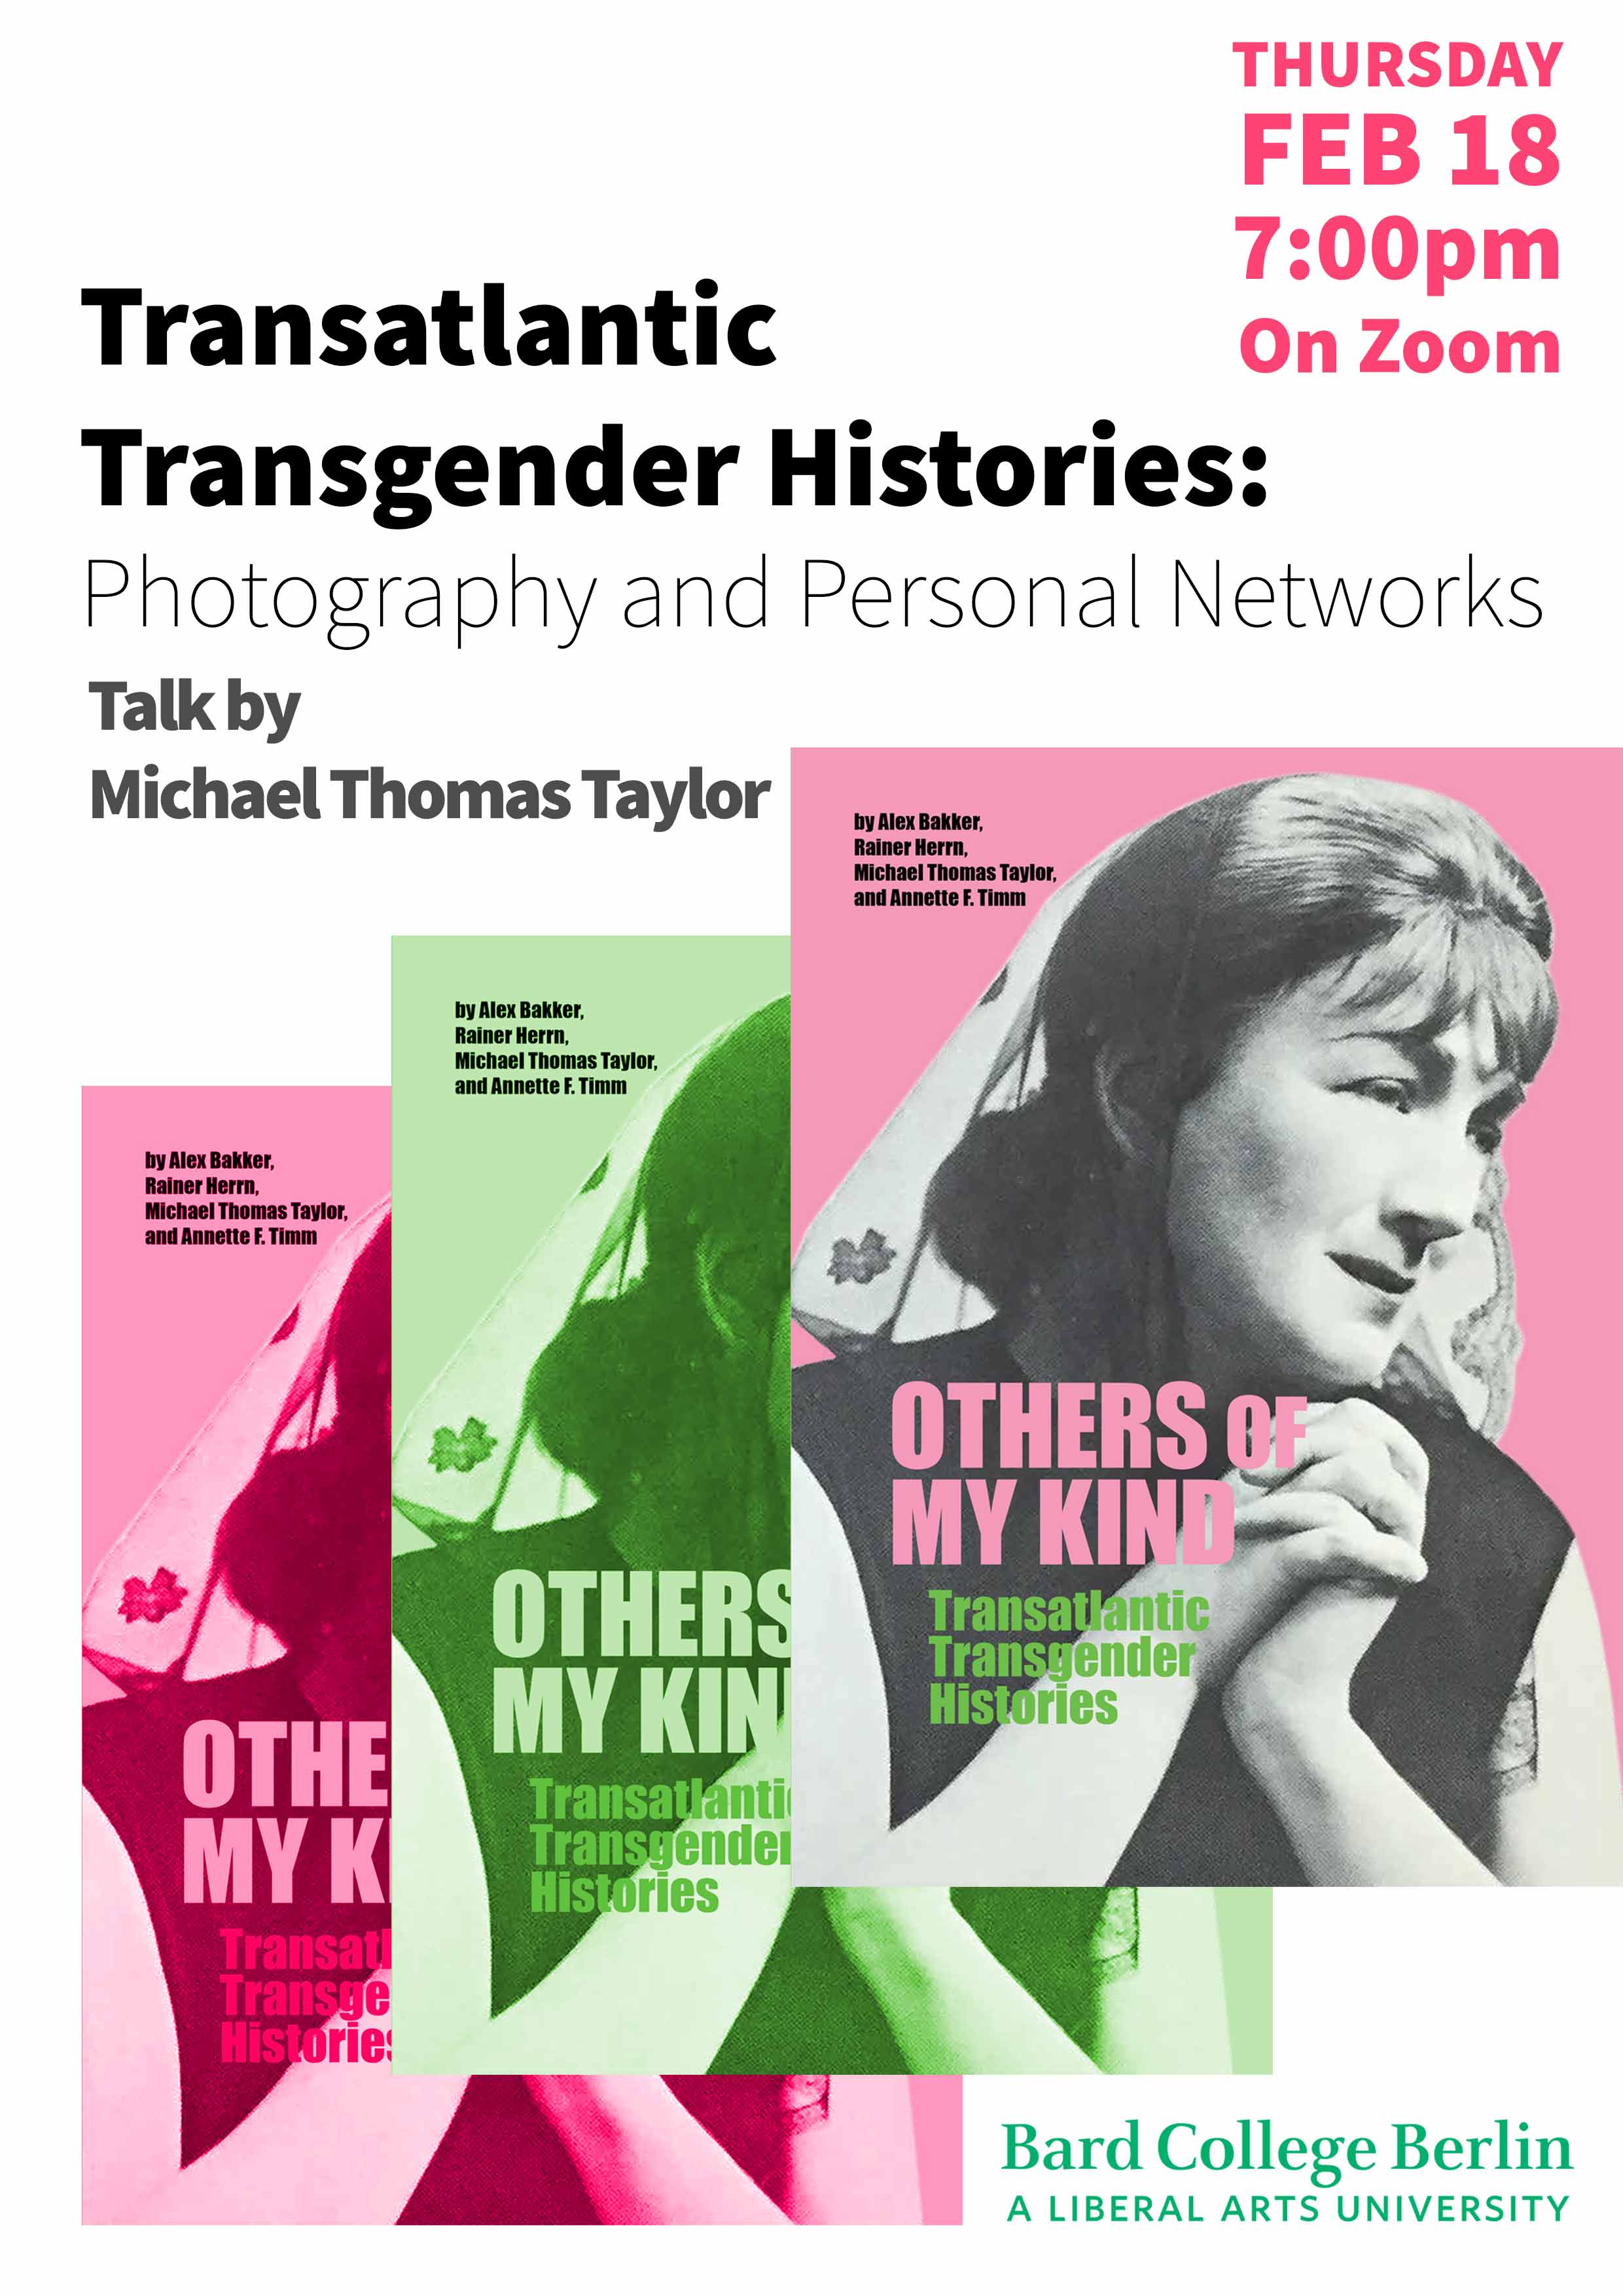 Michael Thomas Taylor&mdash;Transatlantic Transgender Histories: Photography and Personal Networks